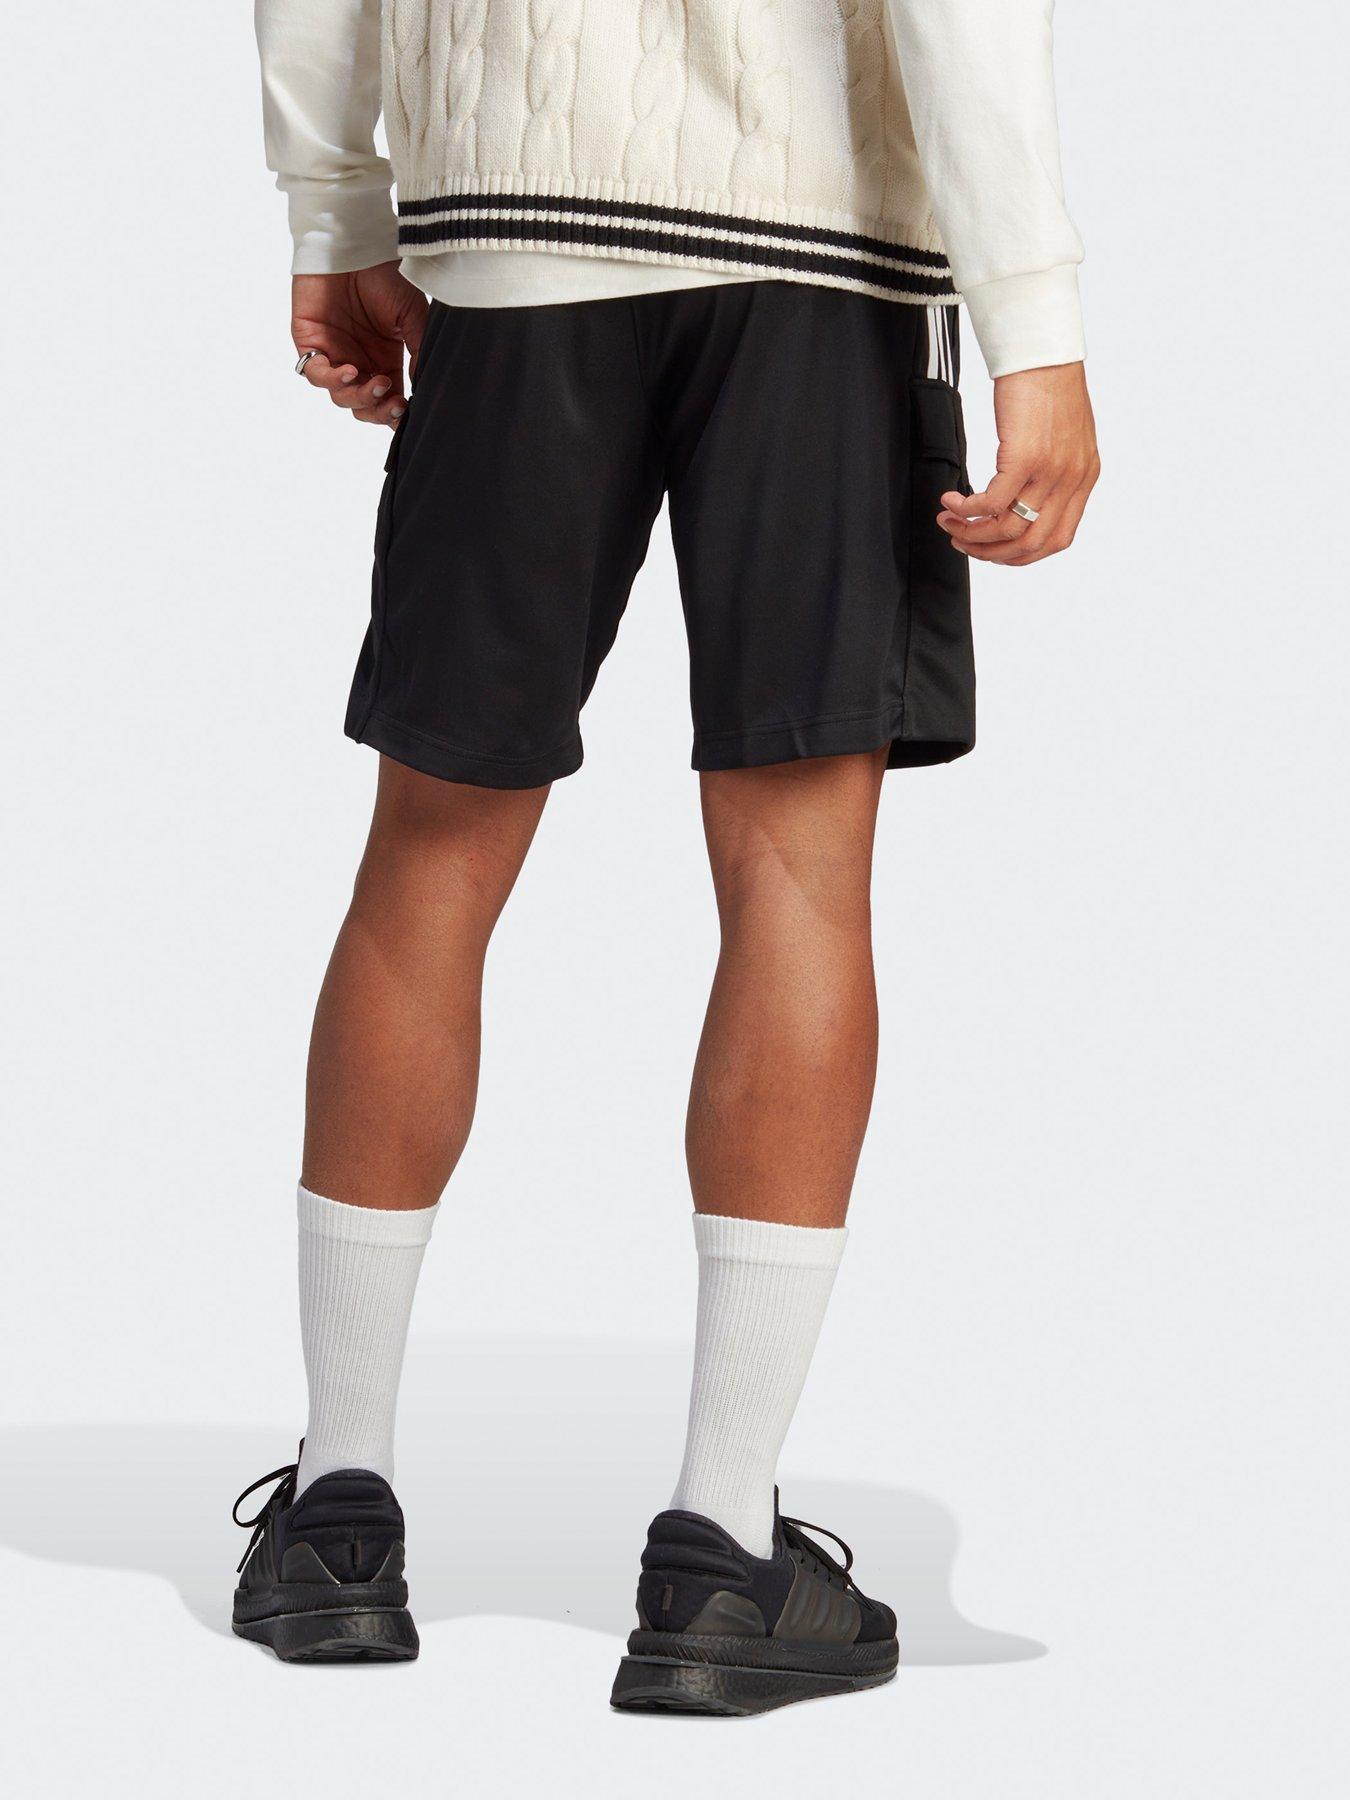 adidas Athletic Pants Men's Black Used XL 729 - Locker Room Direct